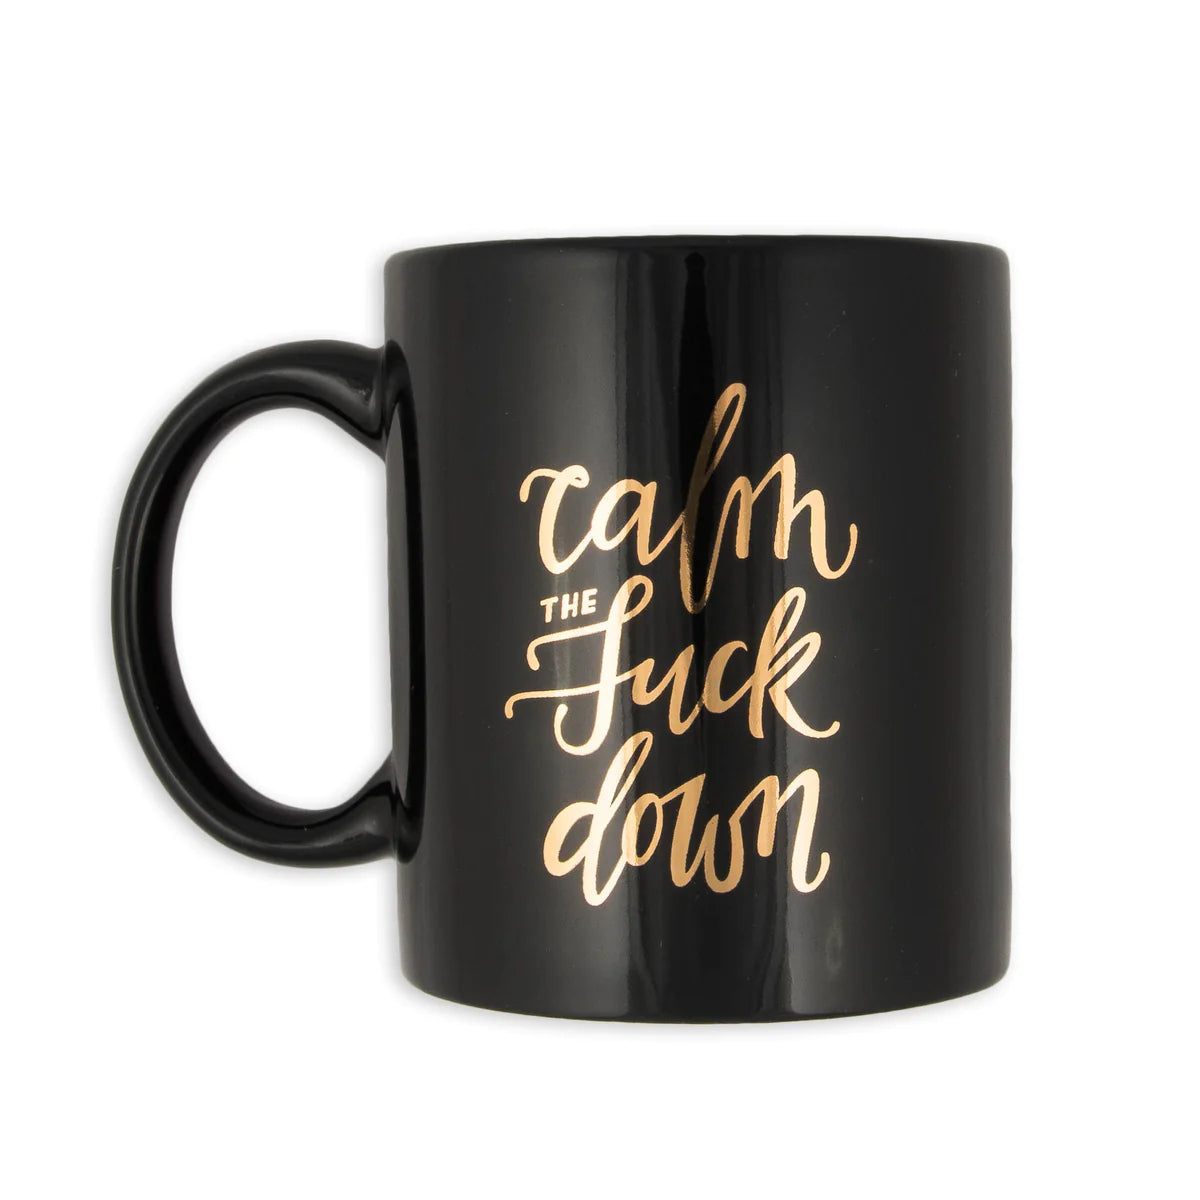 “Calm The Fuck Down” Mug